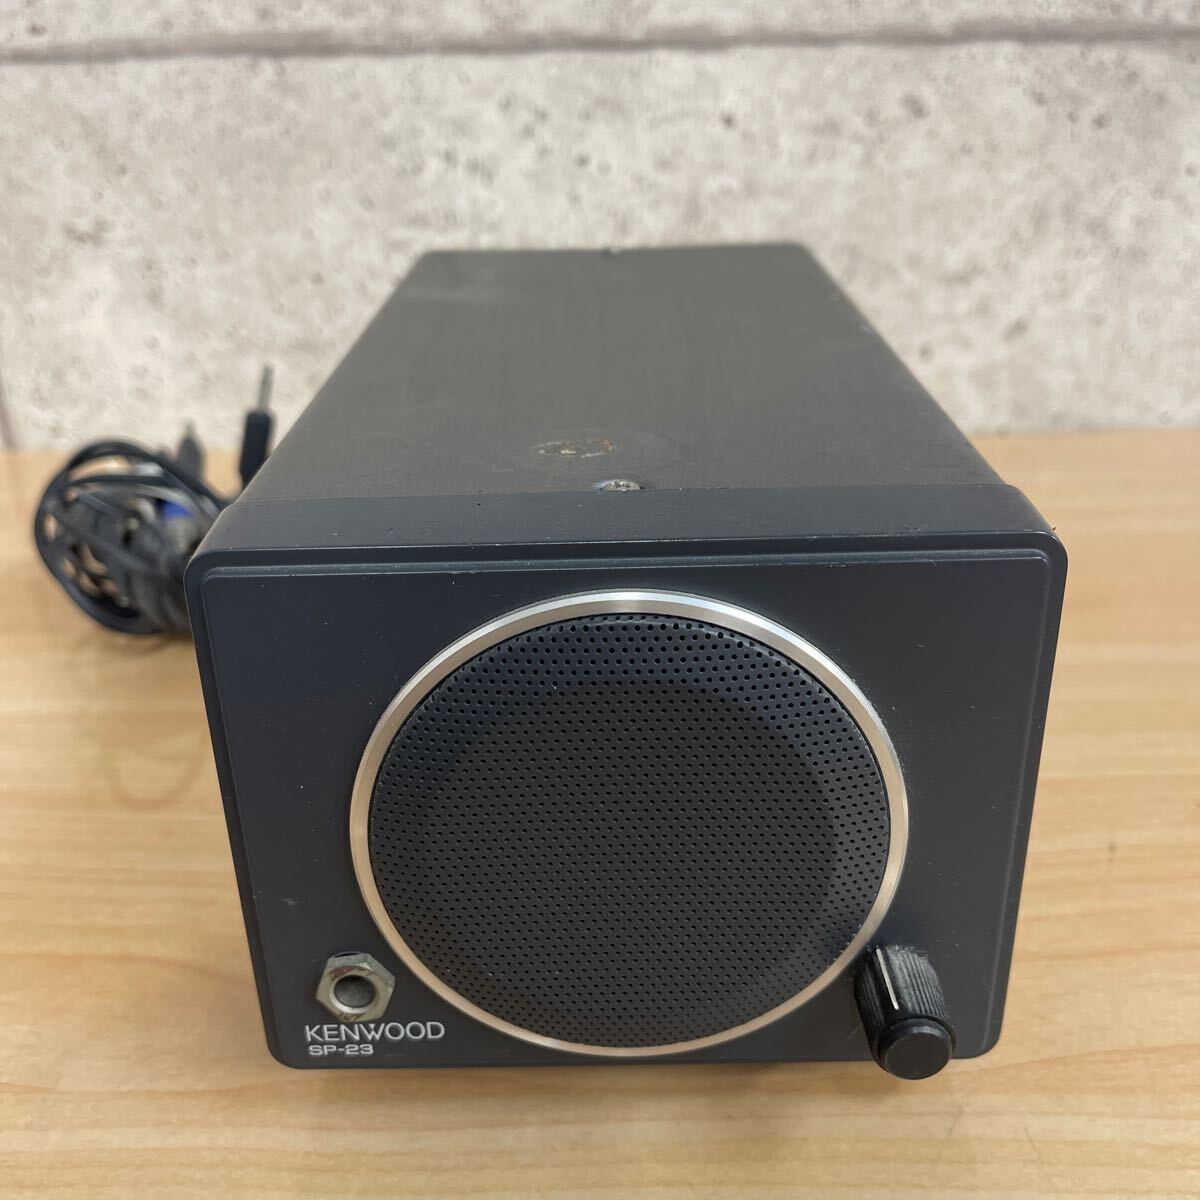 *KENWOOD/ Kenwood external speaker amateur radio SP-23 operation not yet verification goods 